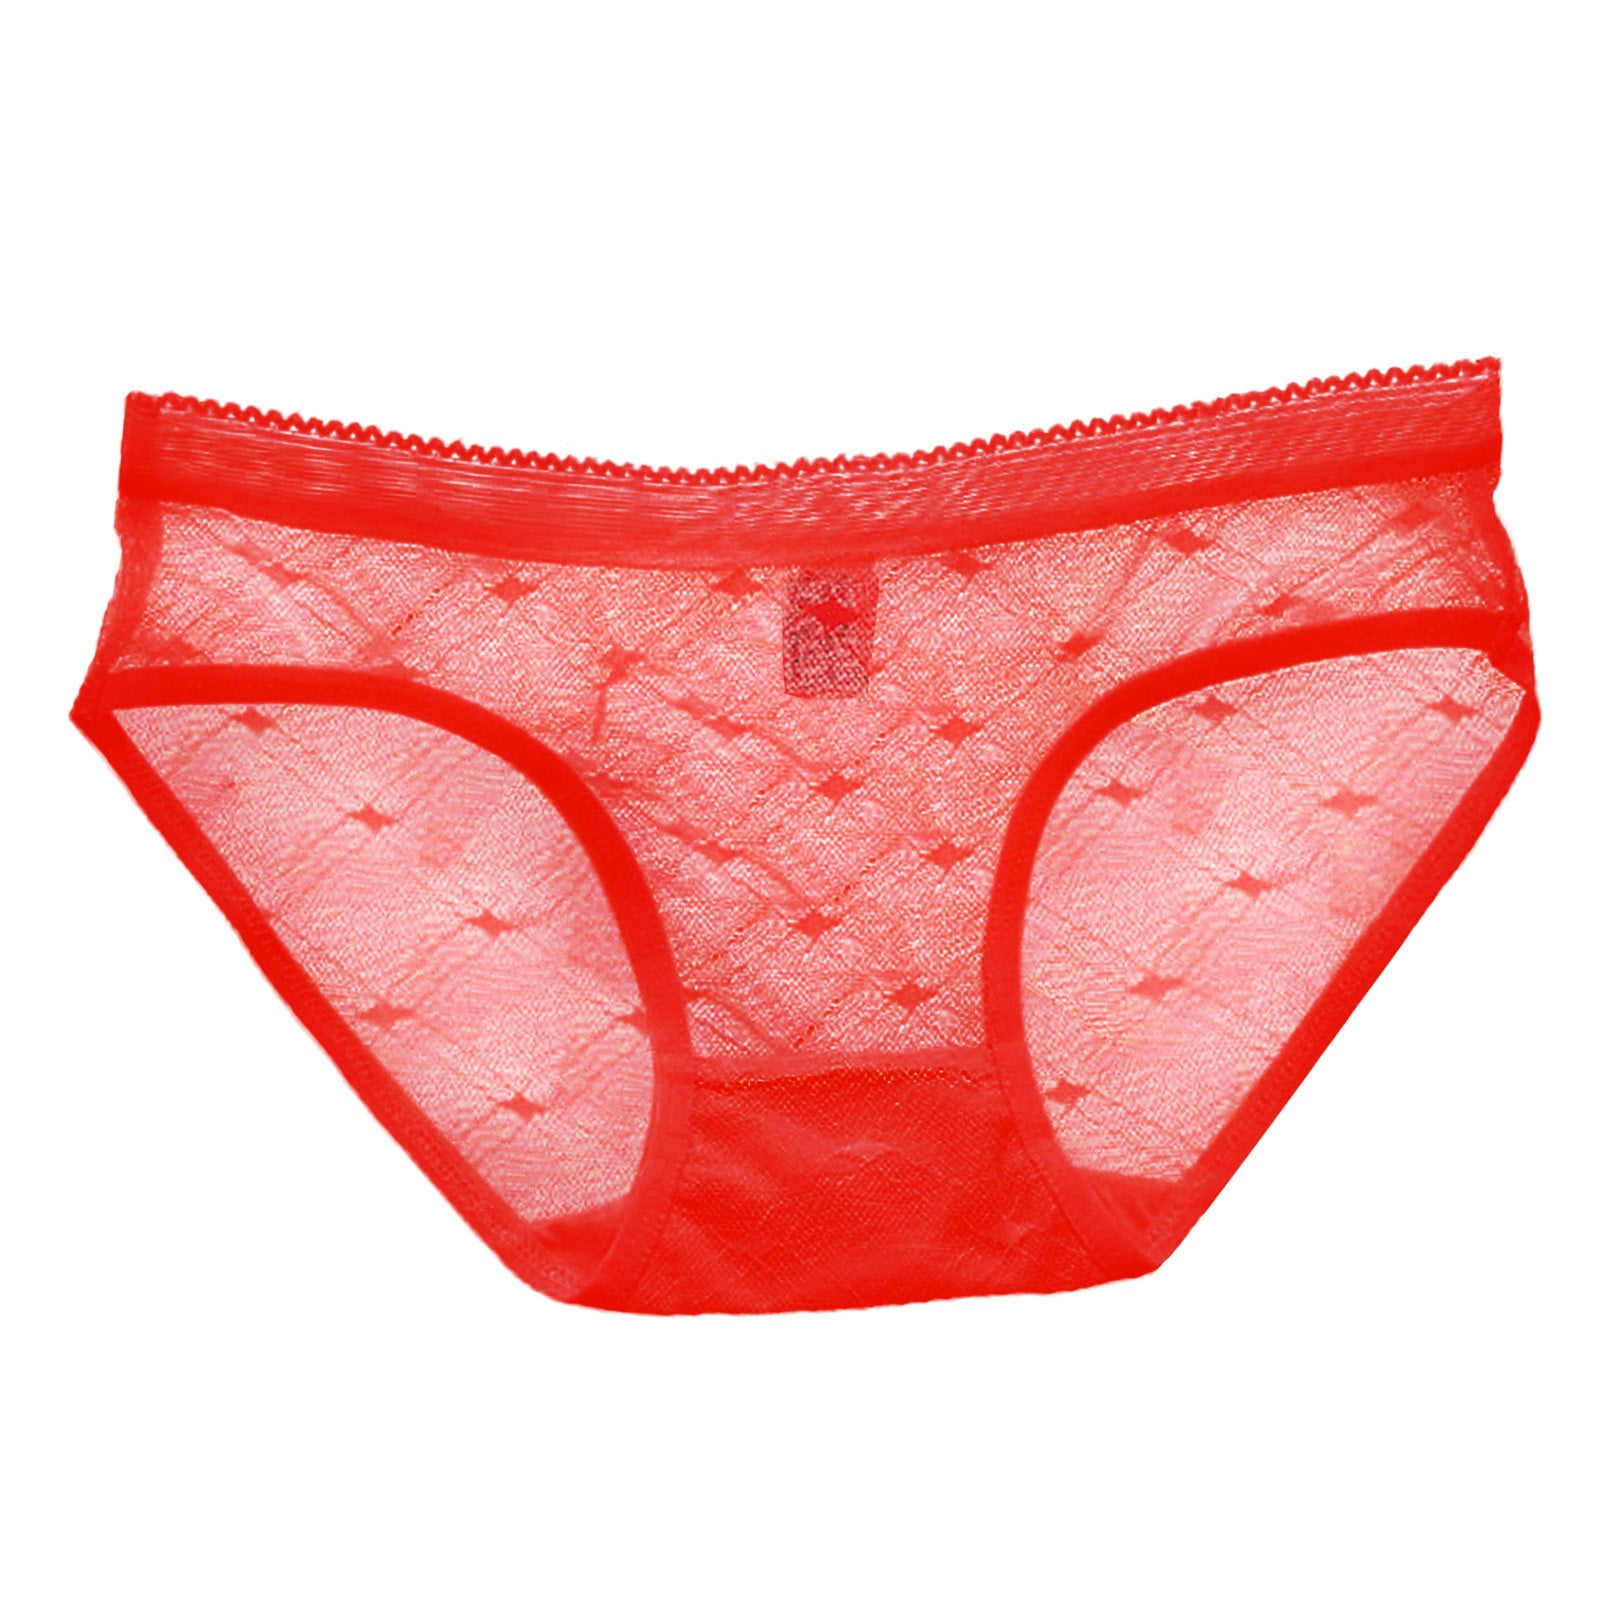 Best Deal for Kingtowag Waist Women's Transparent Underwear Lace Solid